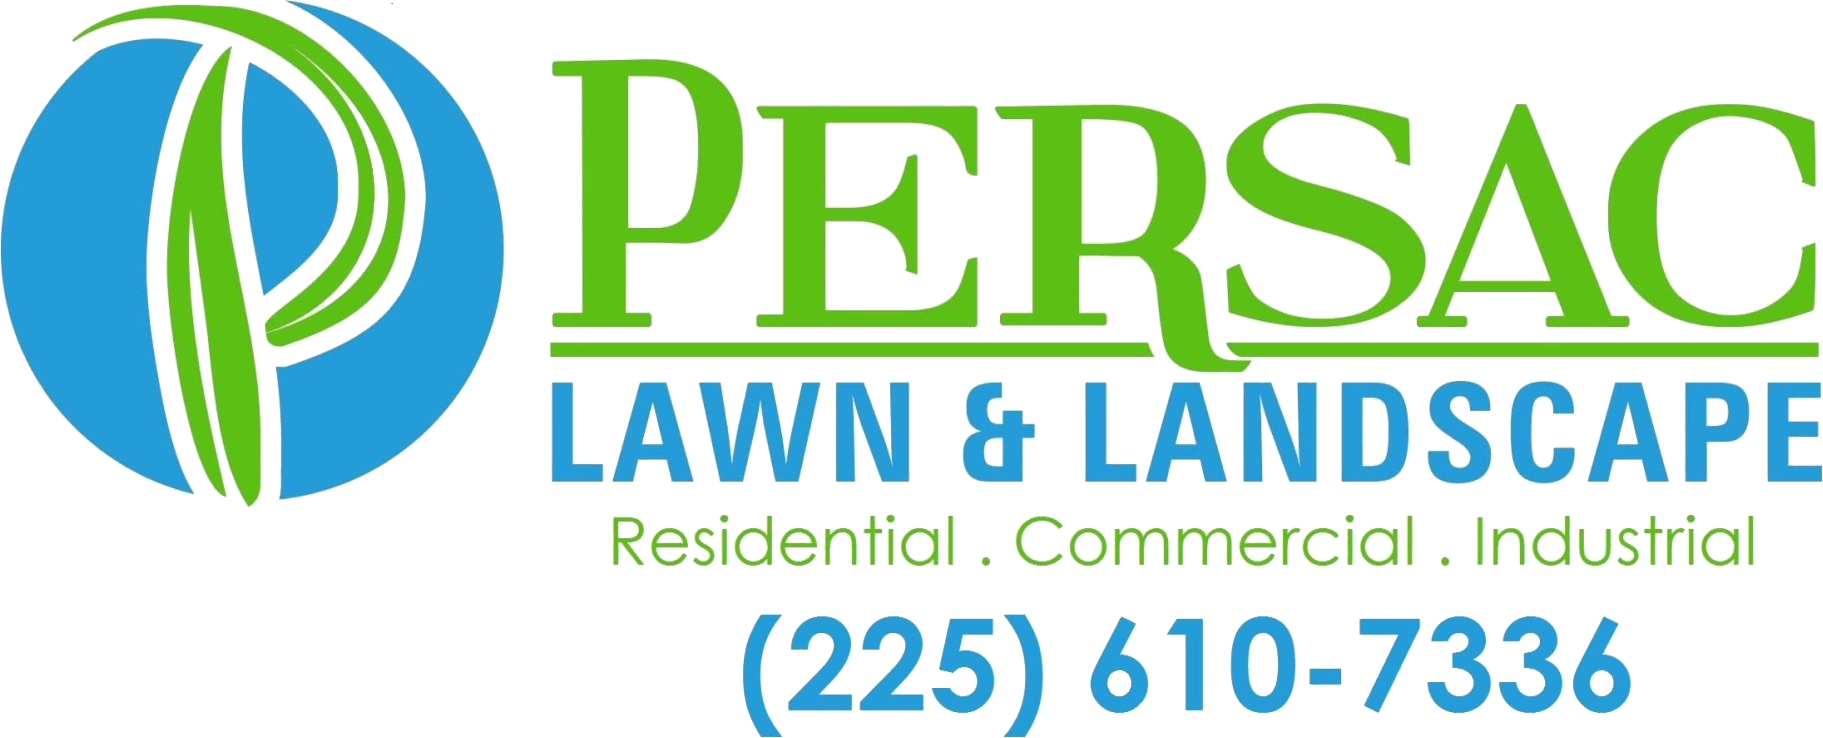 Persac Lawn & Landscape logo